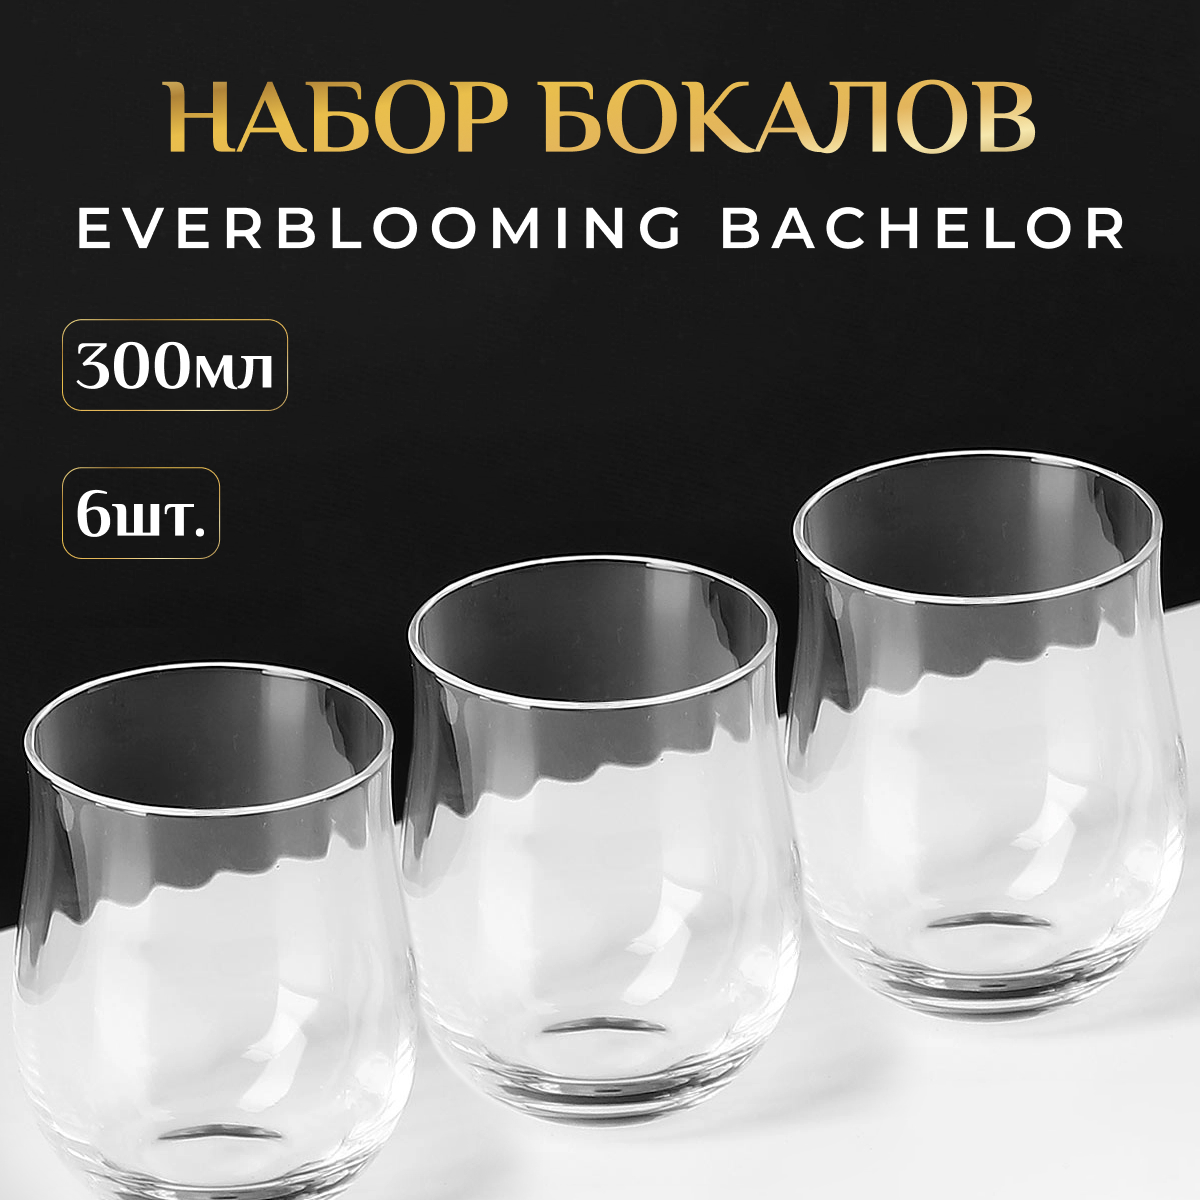 Набор бокалов Everblooming Bachelor 6 шт 300 мл, цвет прозрачный - фото 2